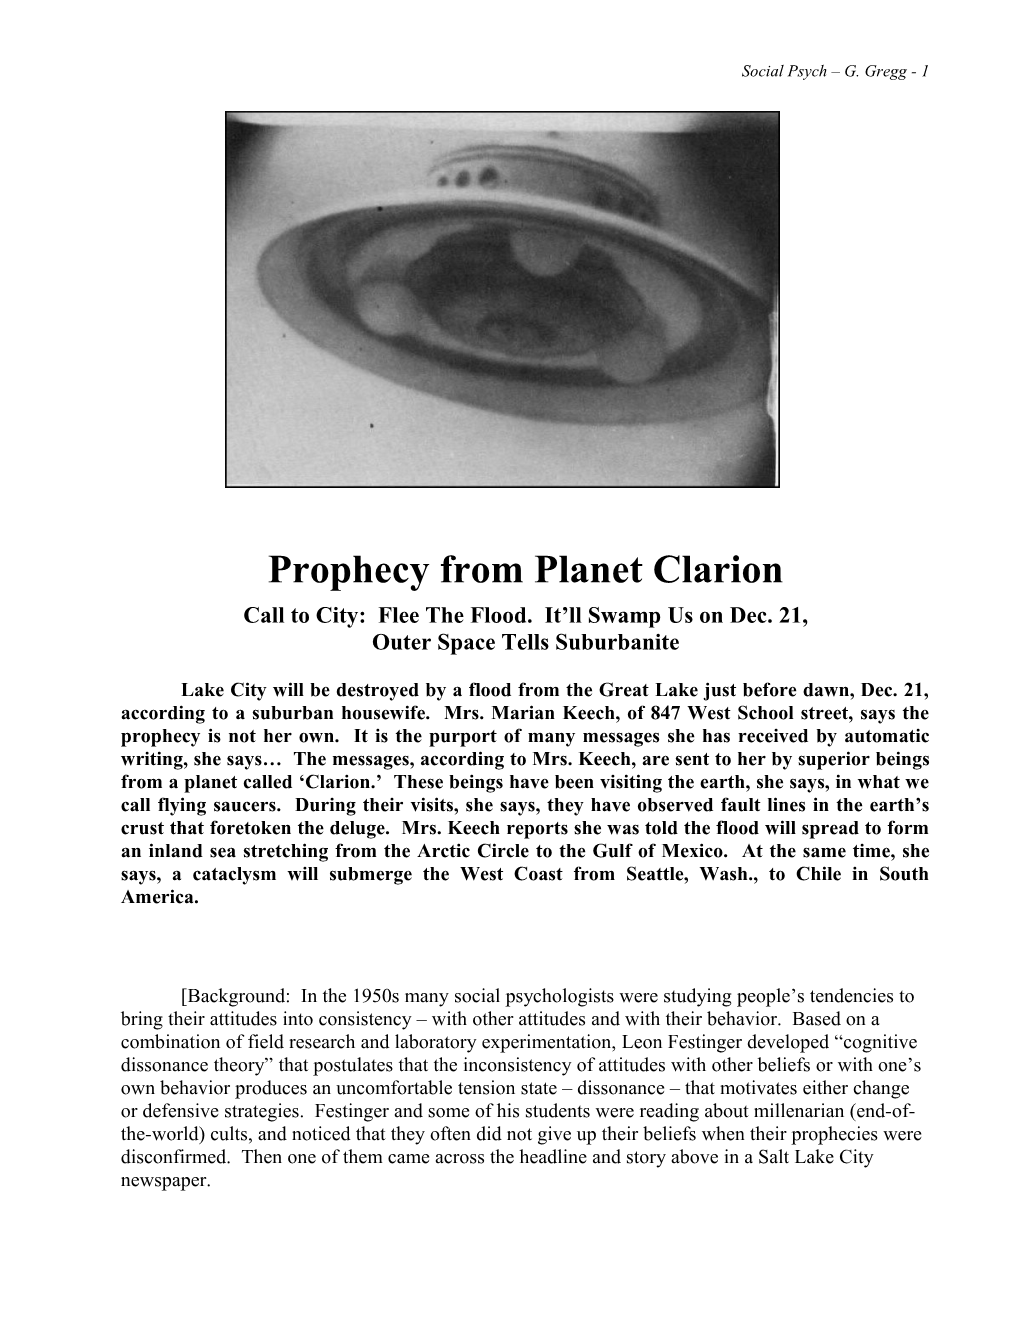 Leon Festinger, Henry Riecken, and Stanley Schachter (1956) When Prophecy Fails